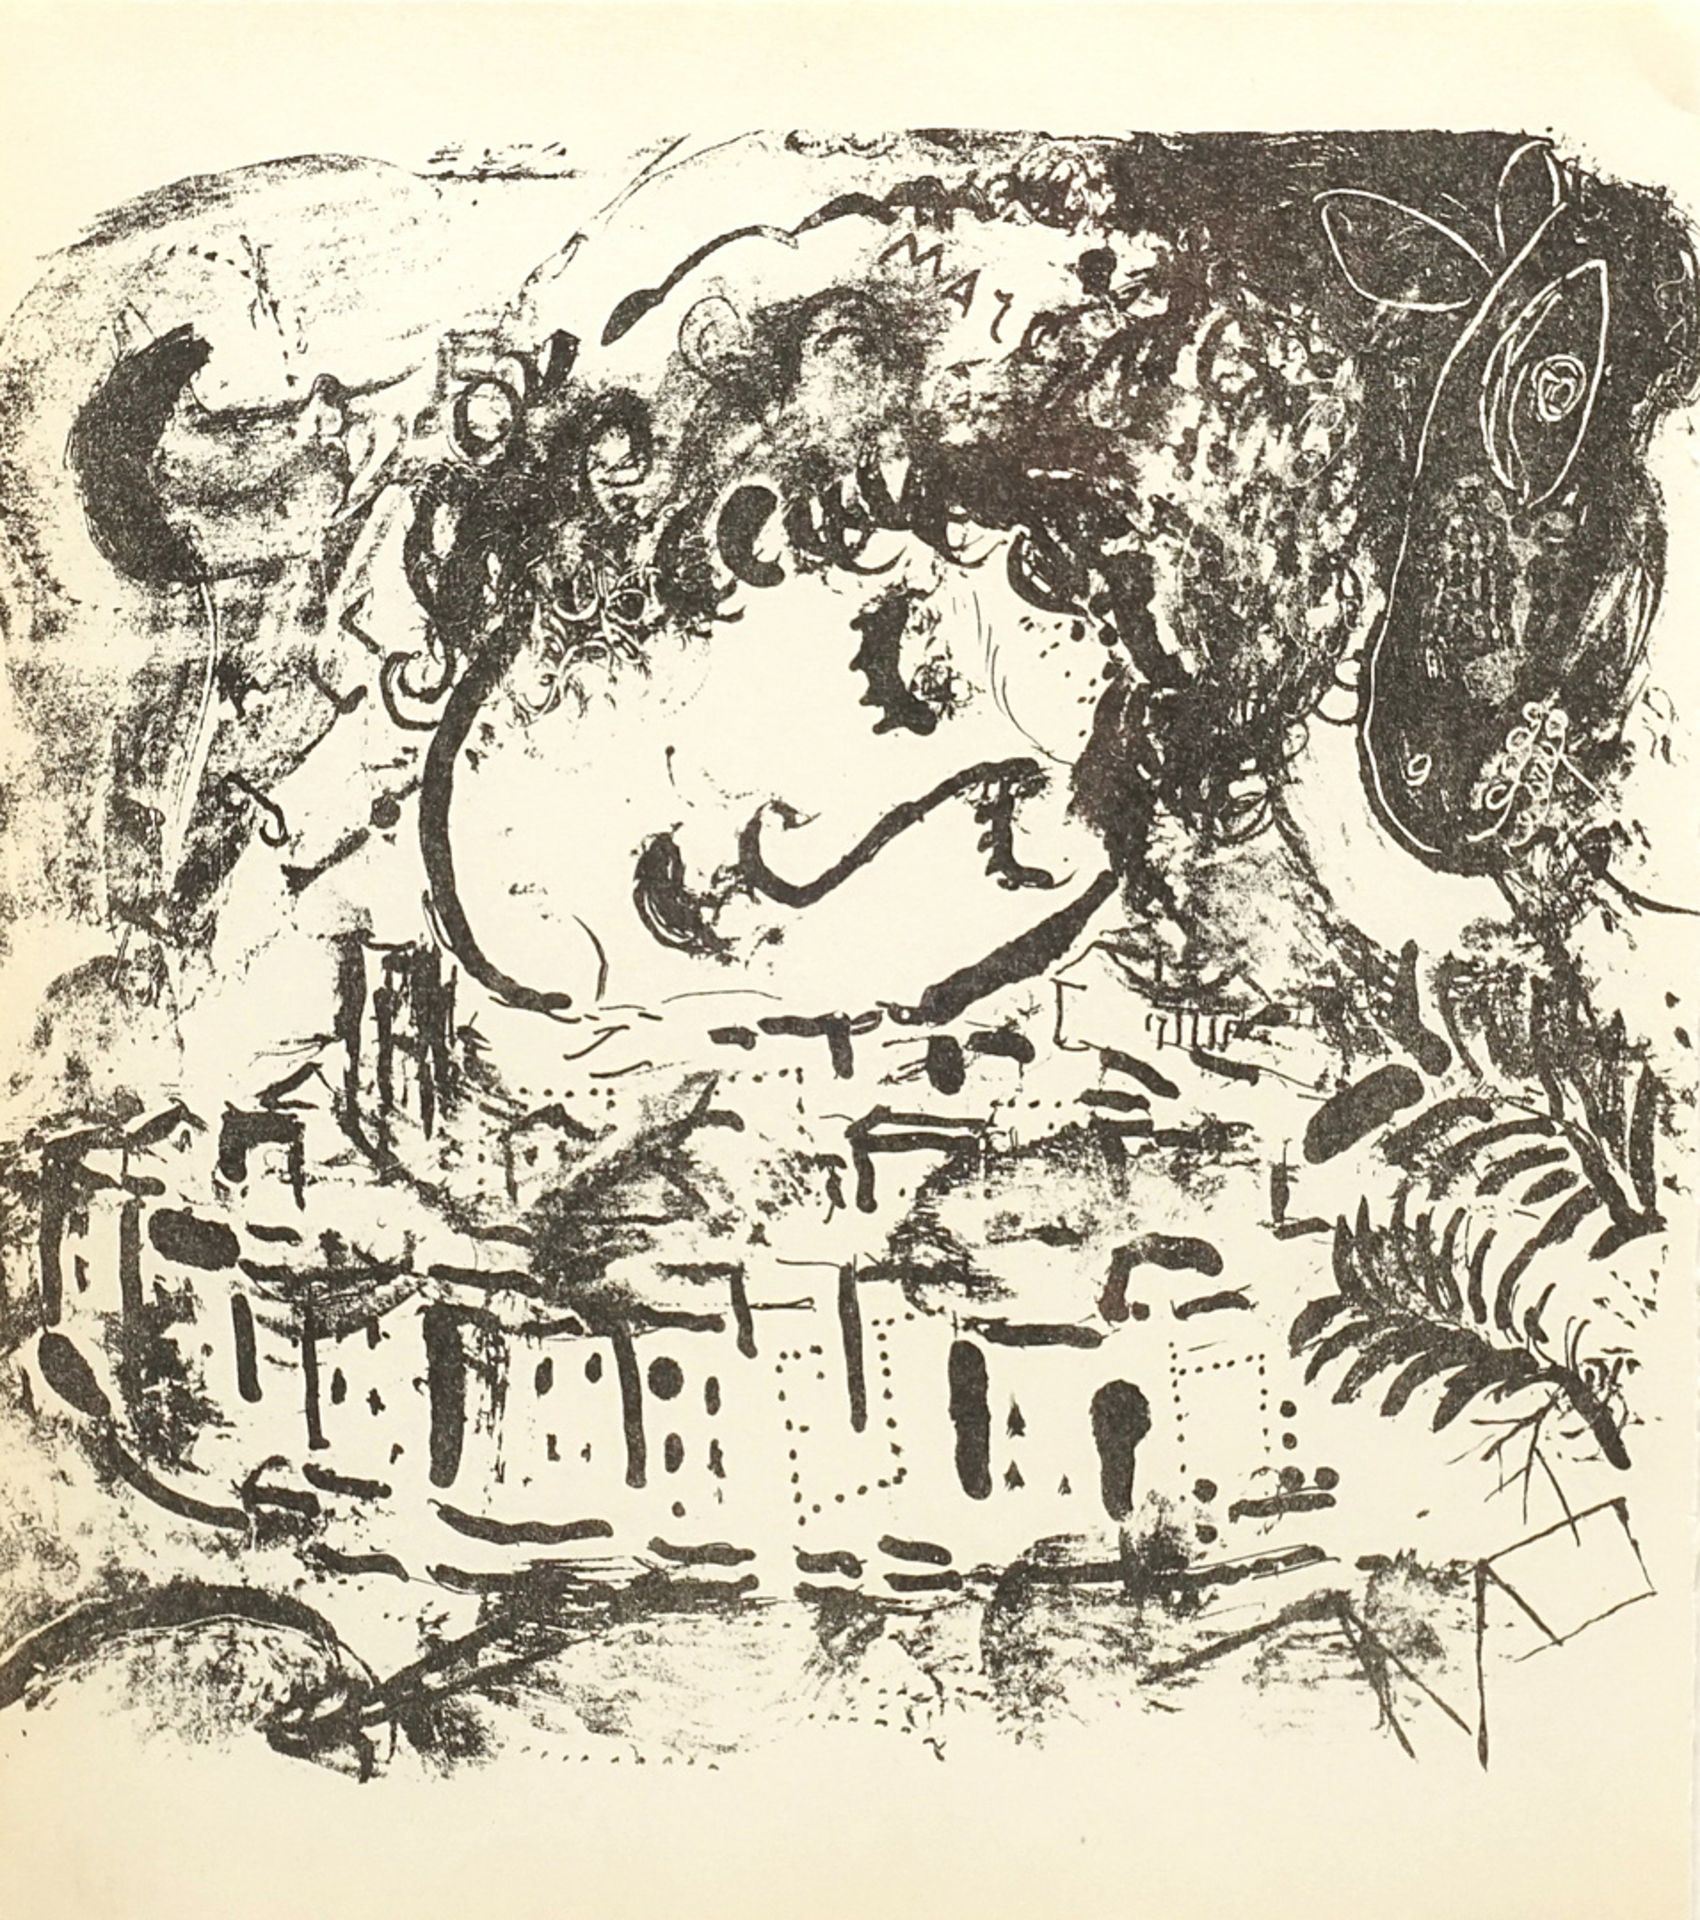 Marc Chagall (1887-1985), "Le Village"